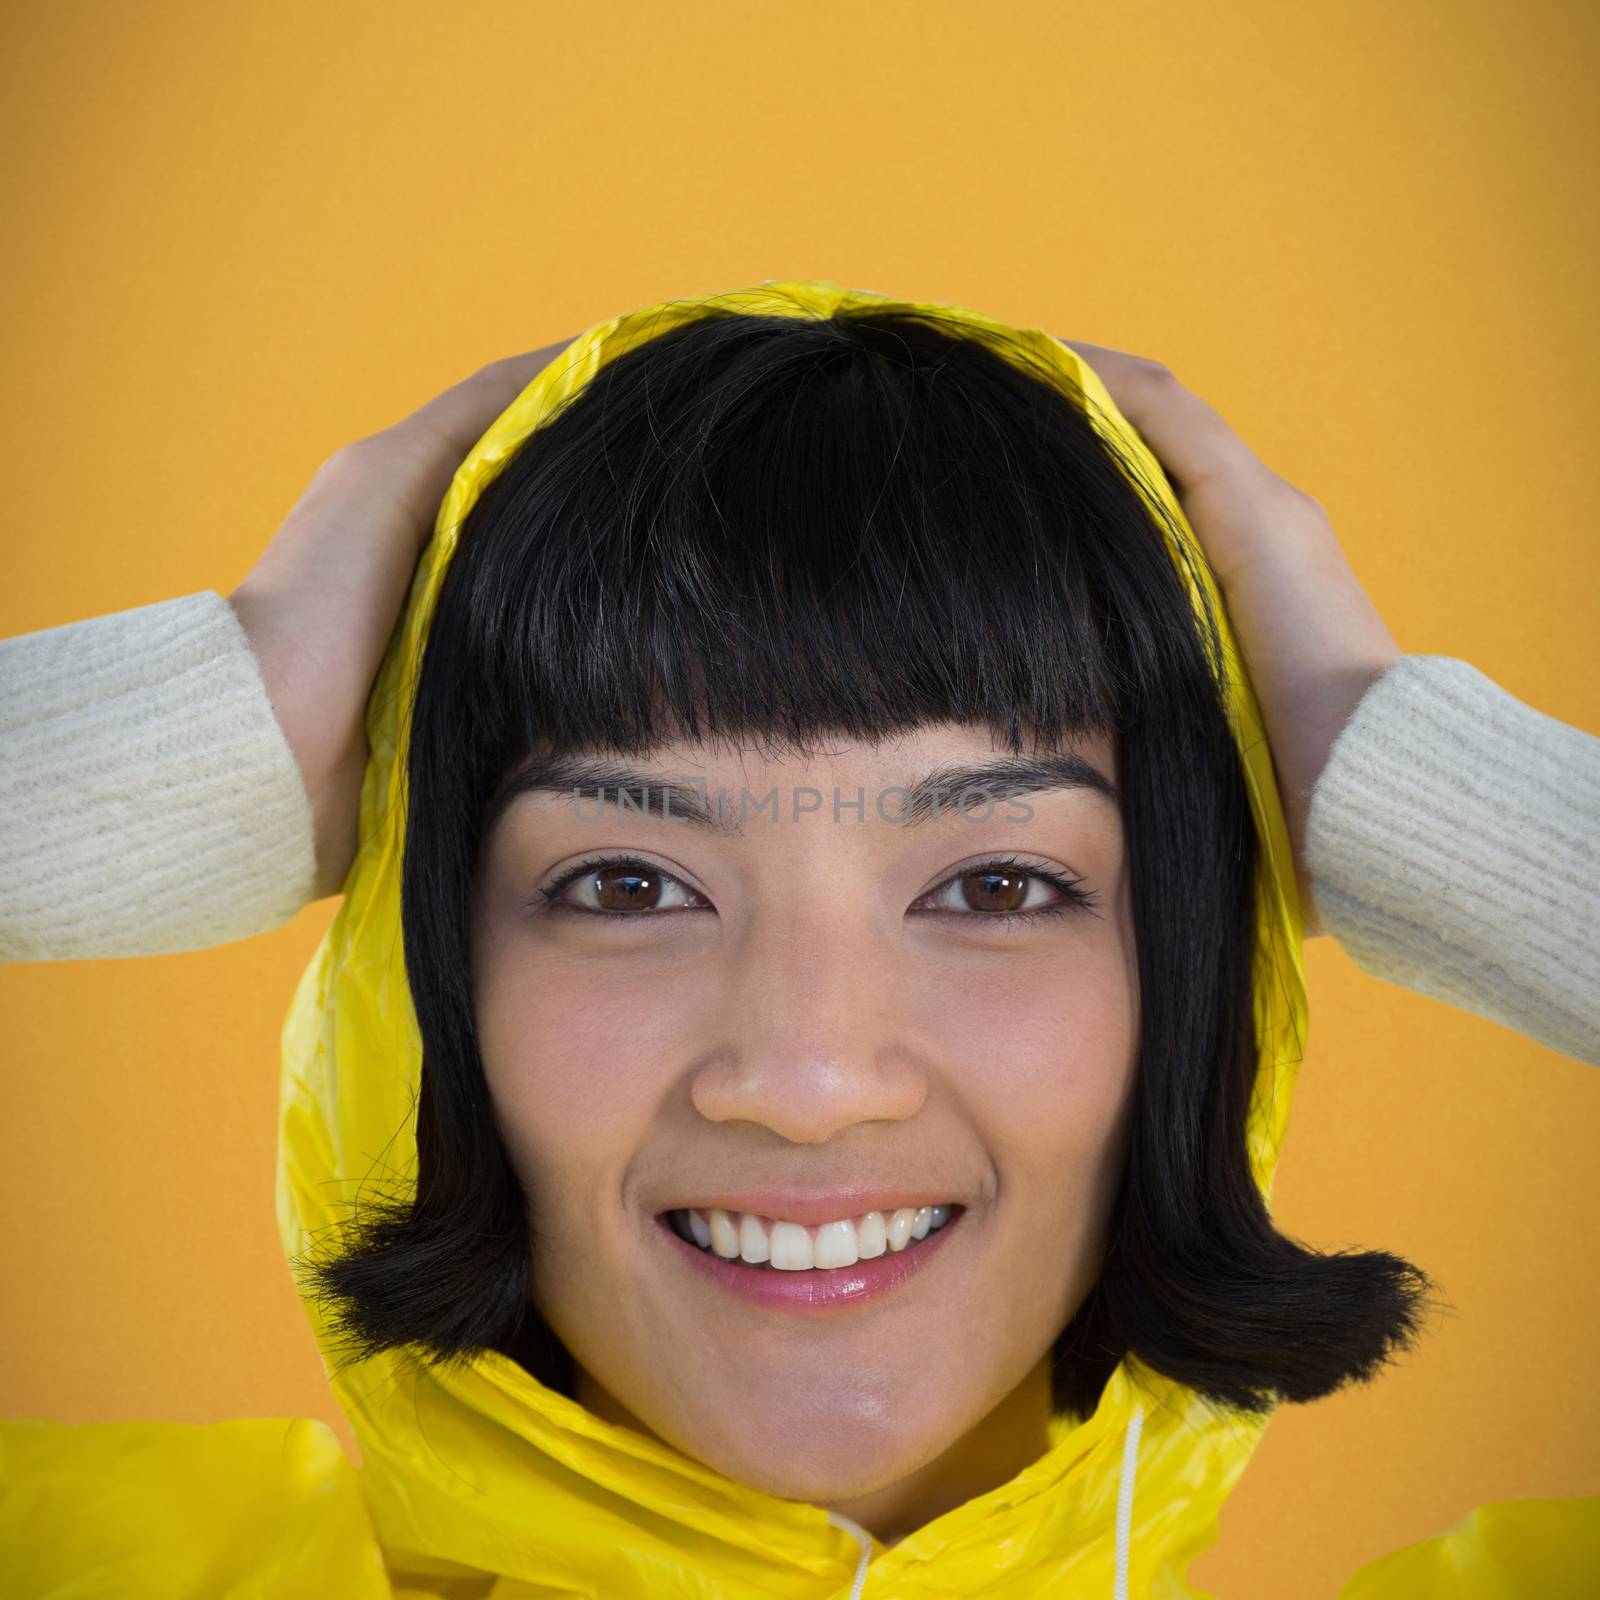 Woman wearing yellow raincoat against white background against orange background